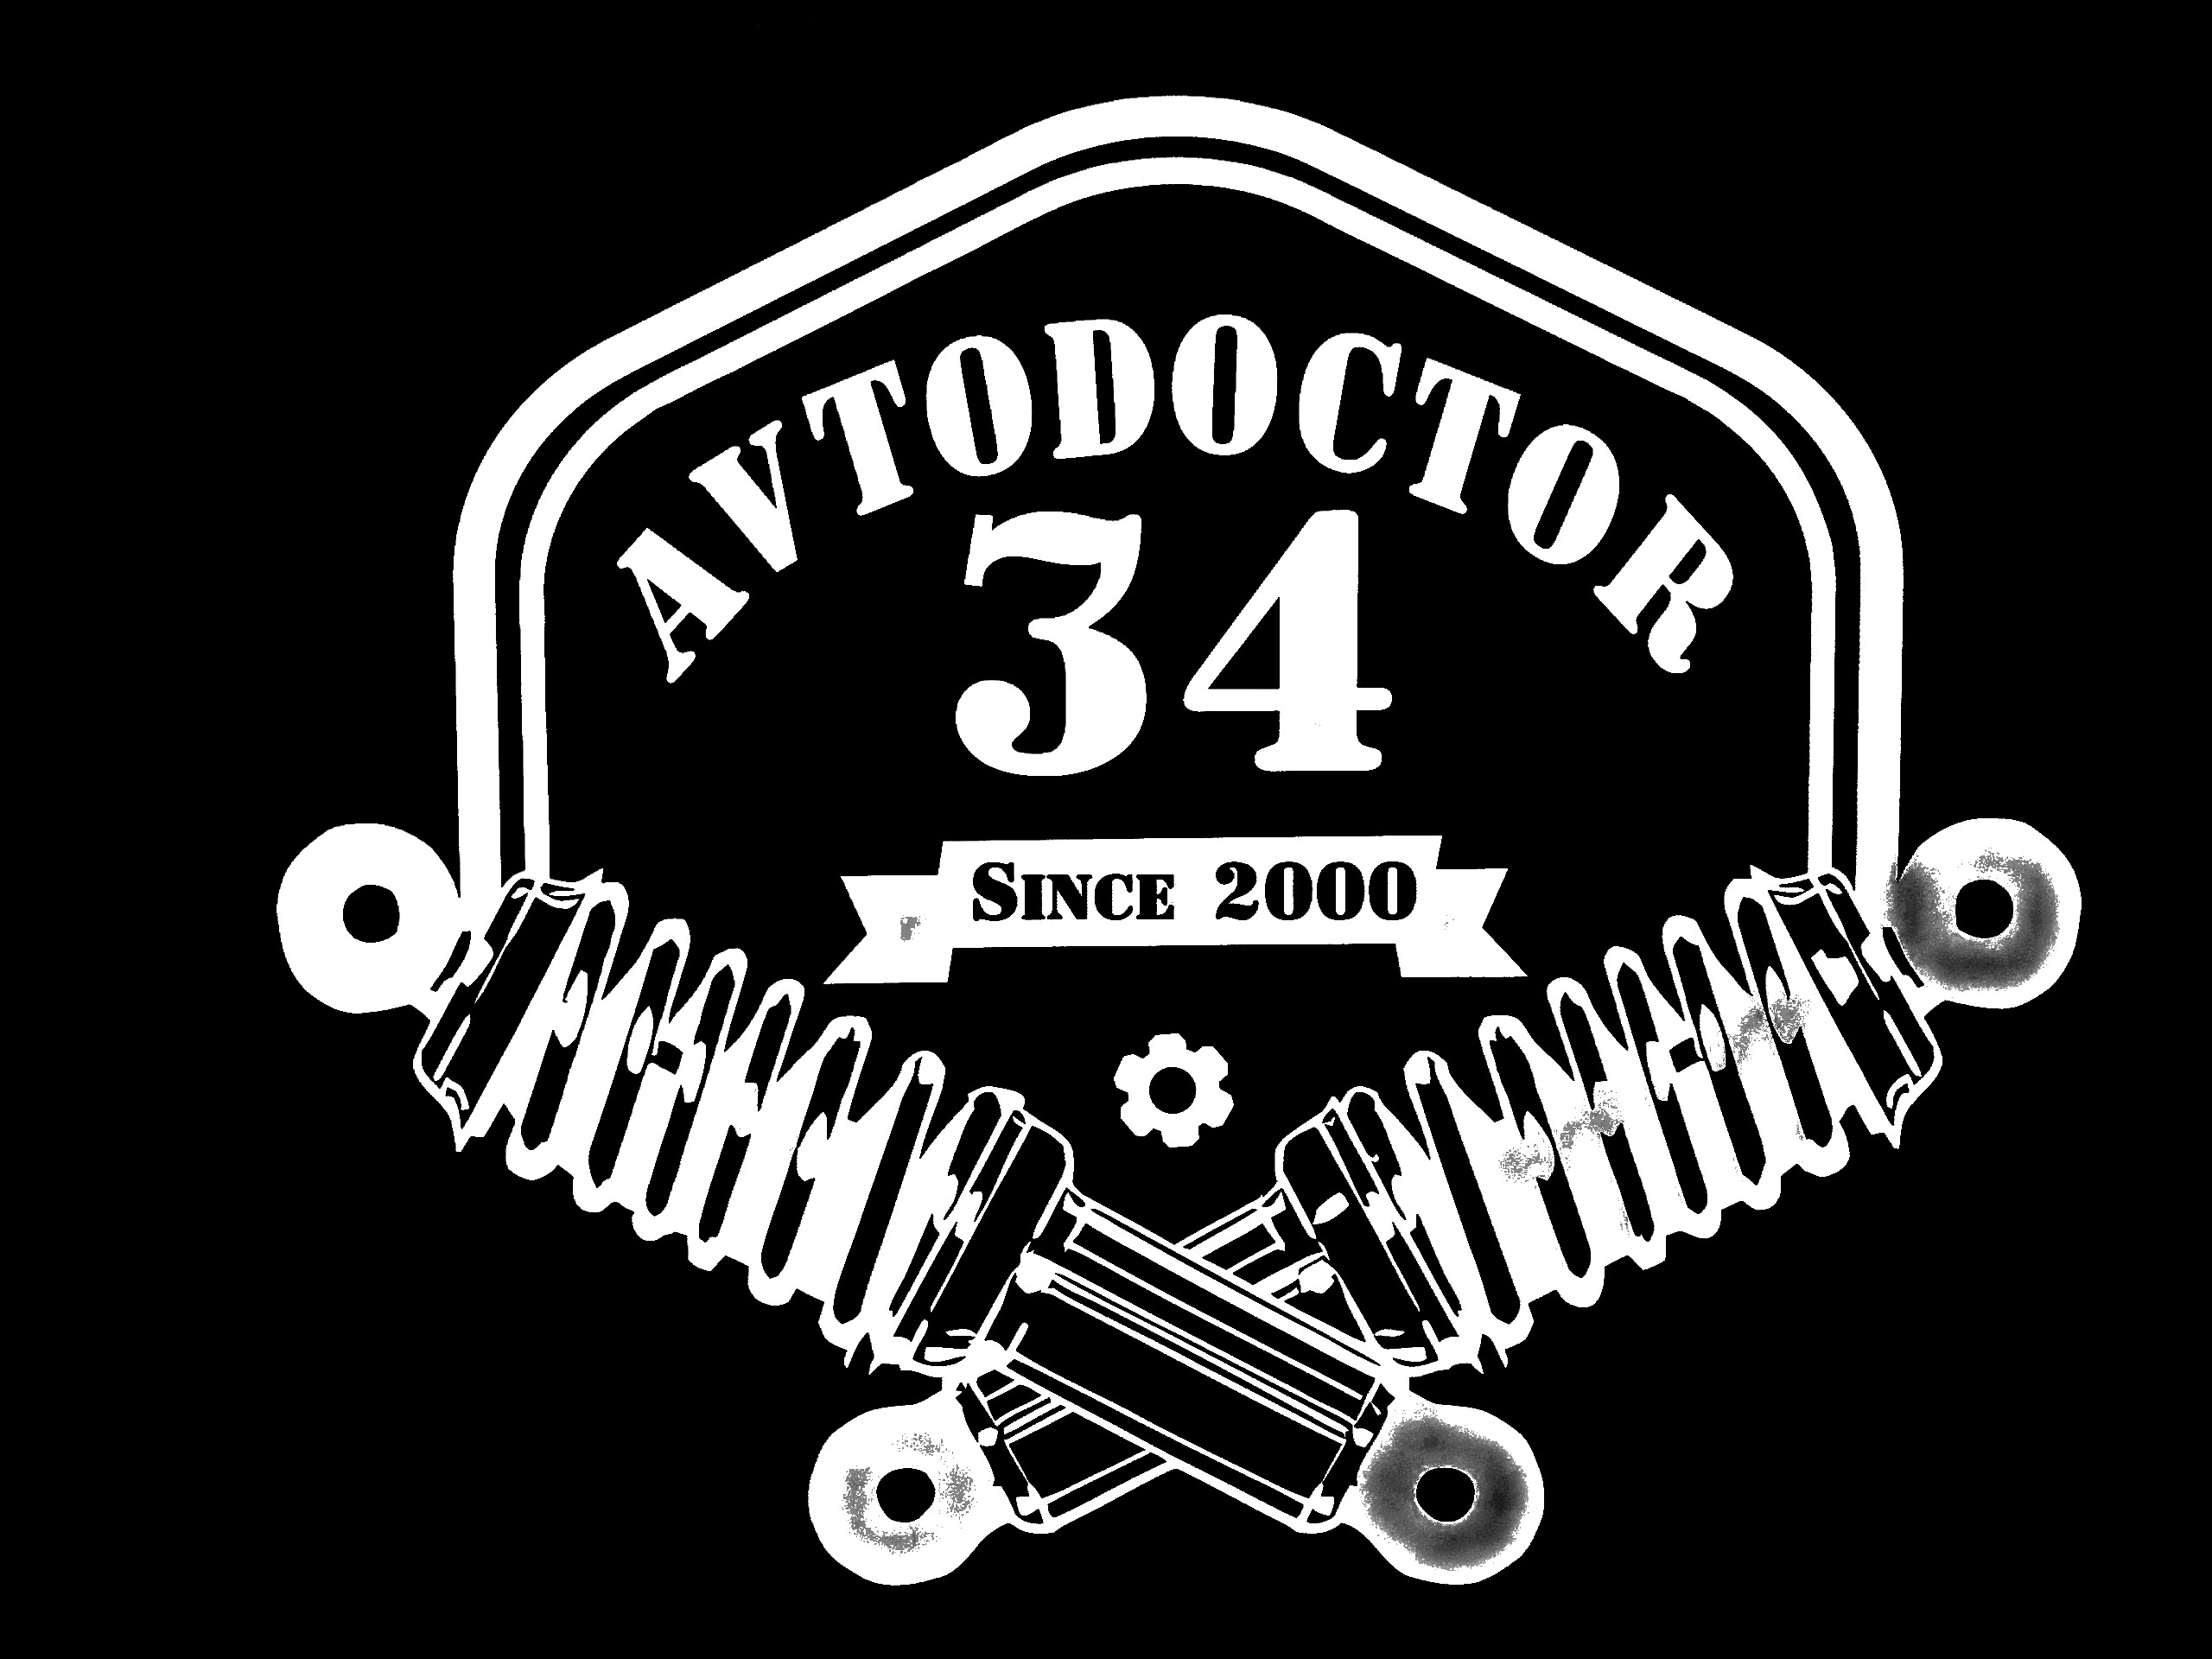 AUTODOCTOR34